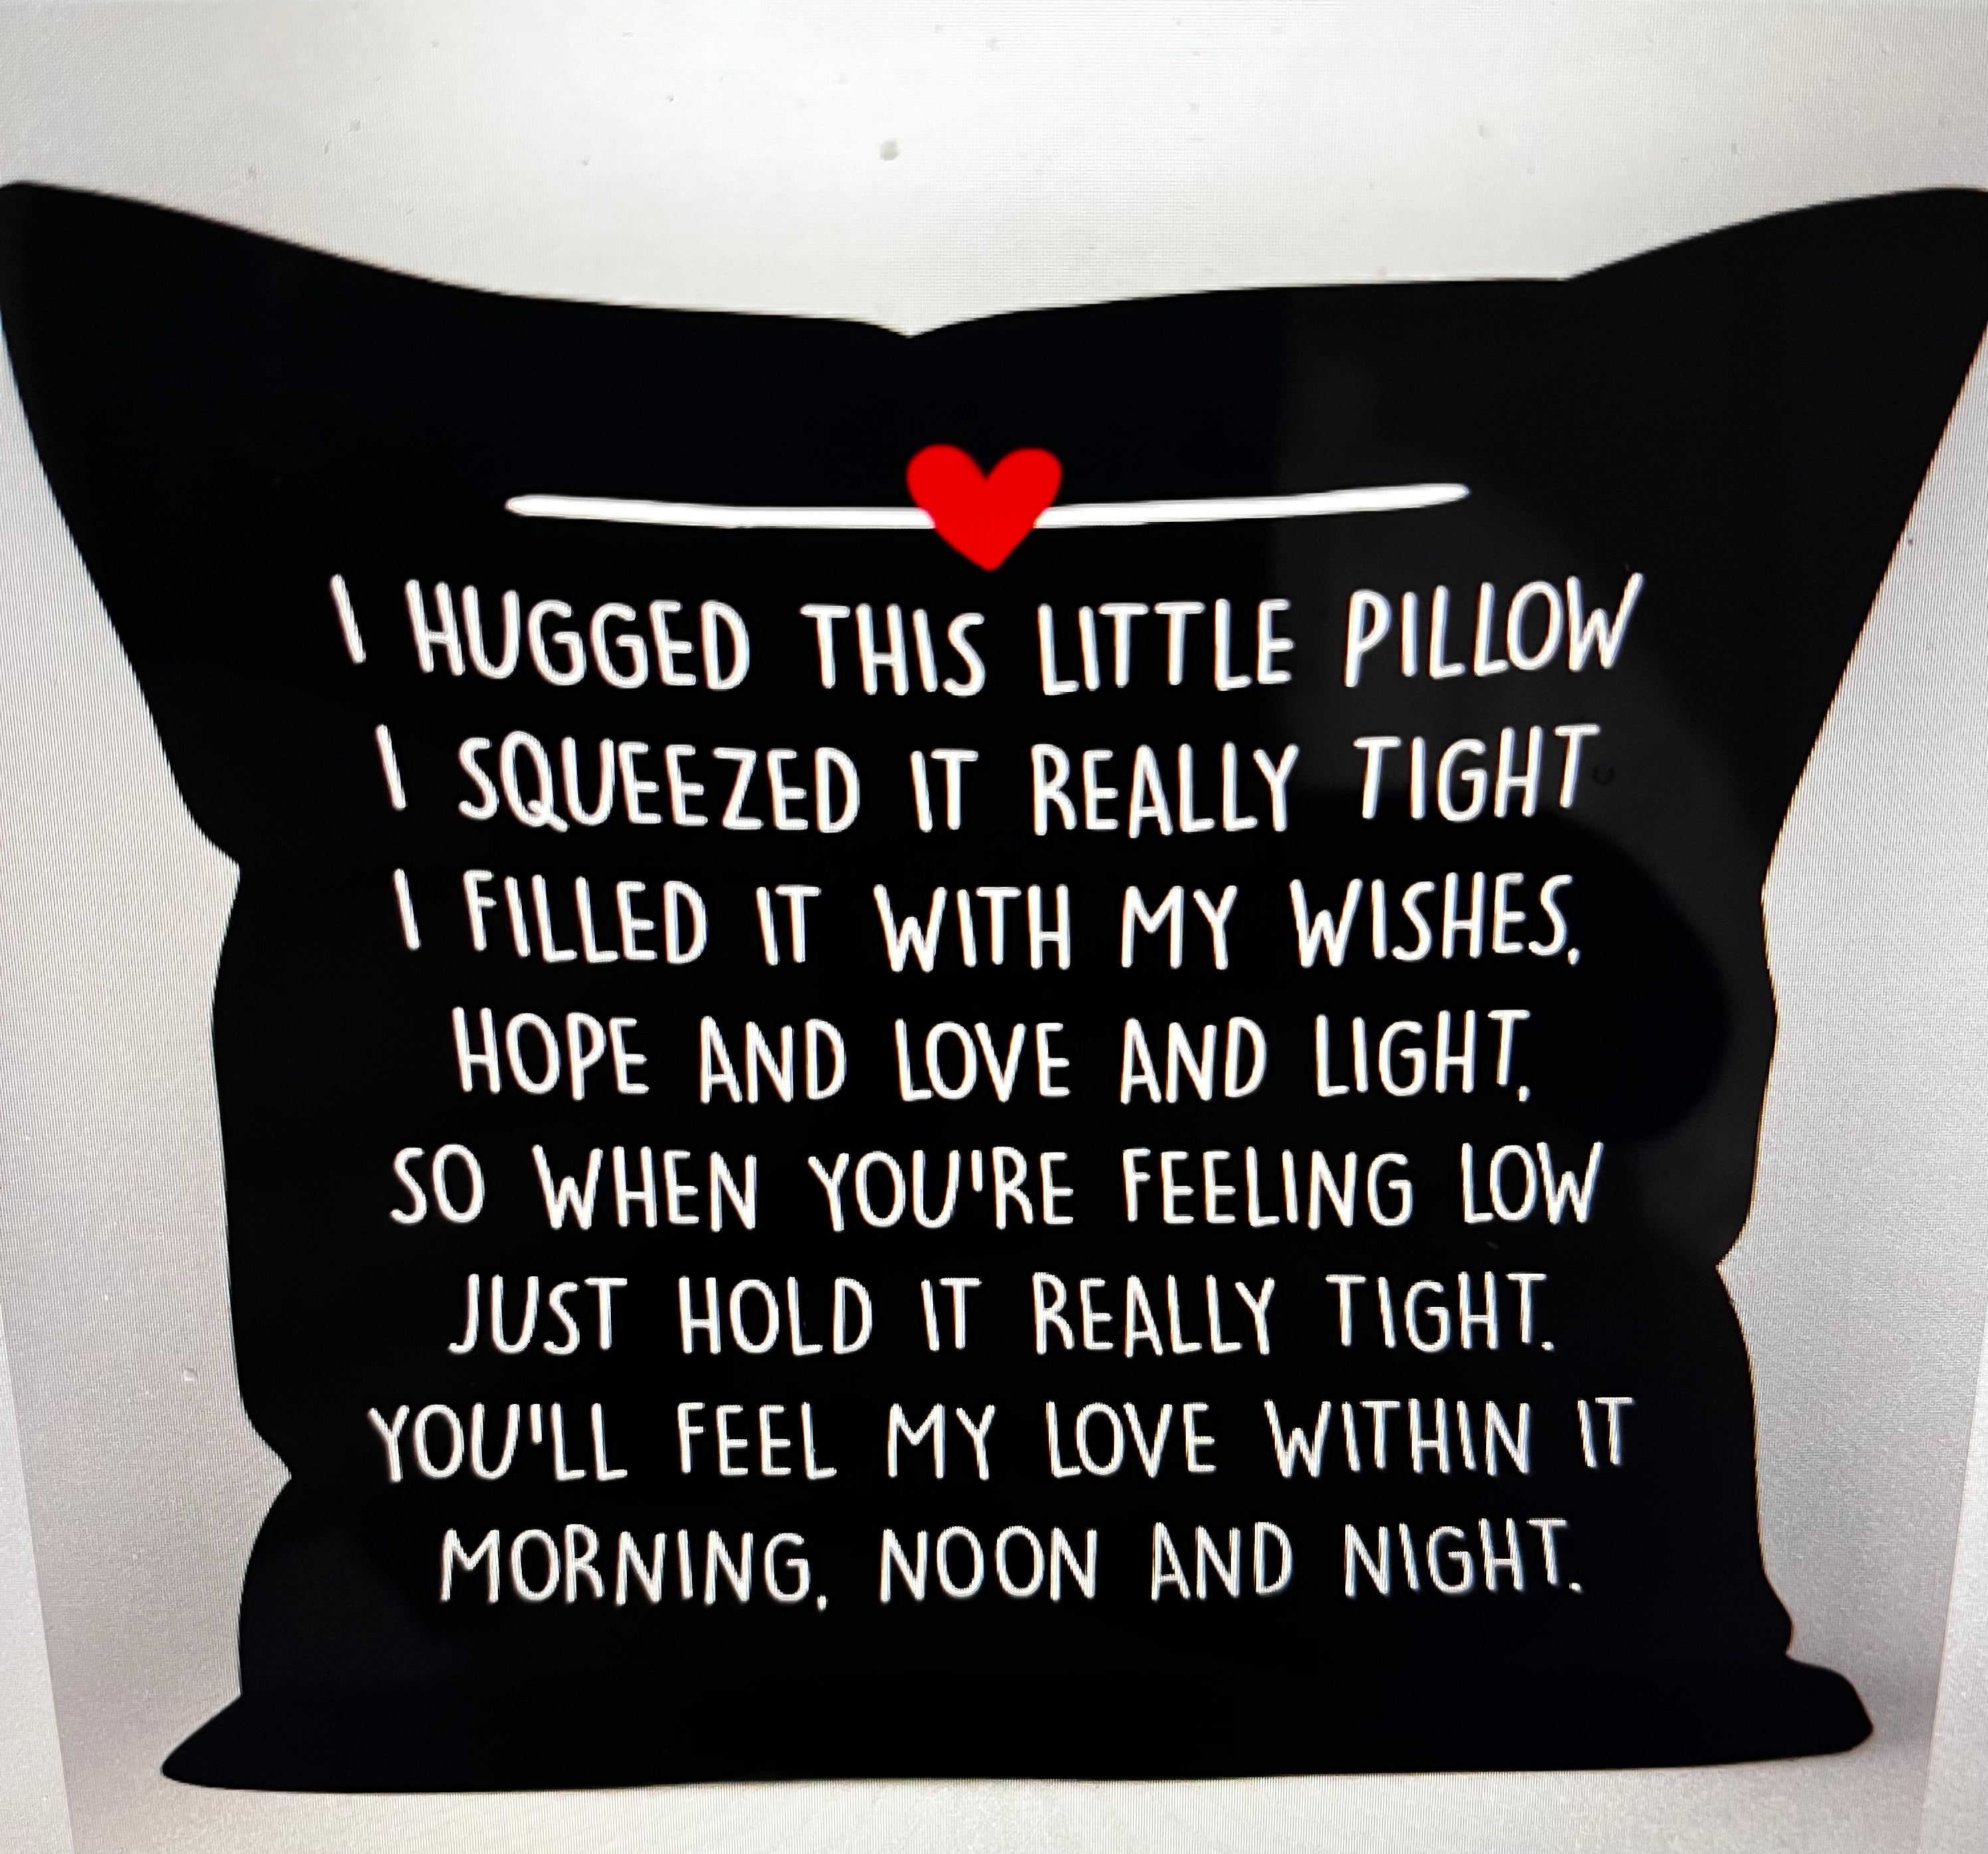 I Hugged This Little Pillow... - Unique Pillows - Send A Hug